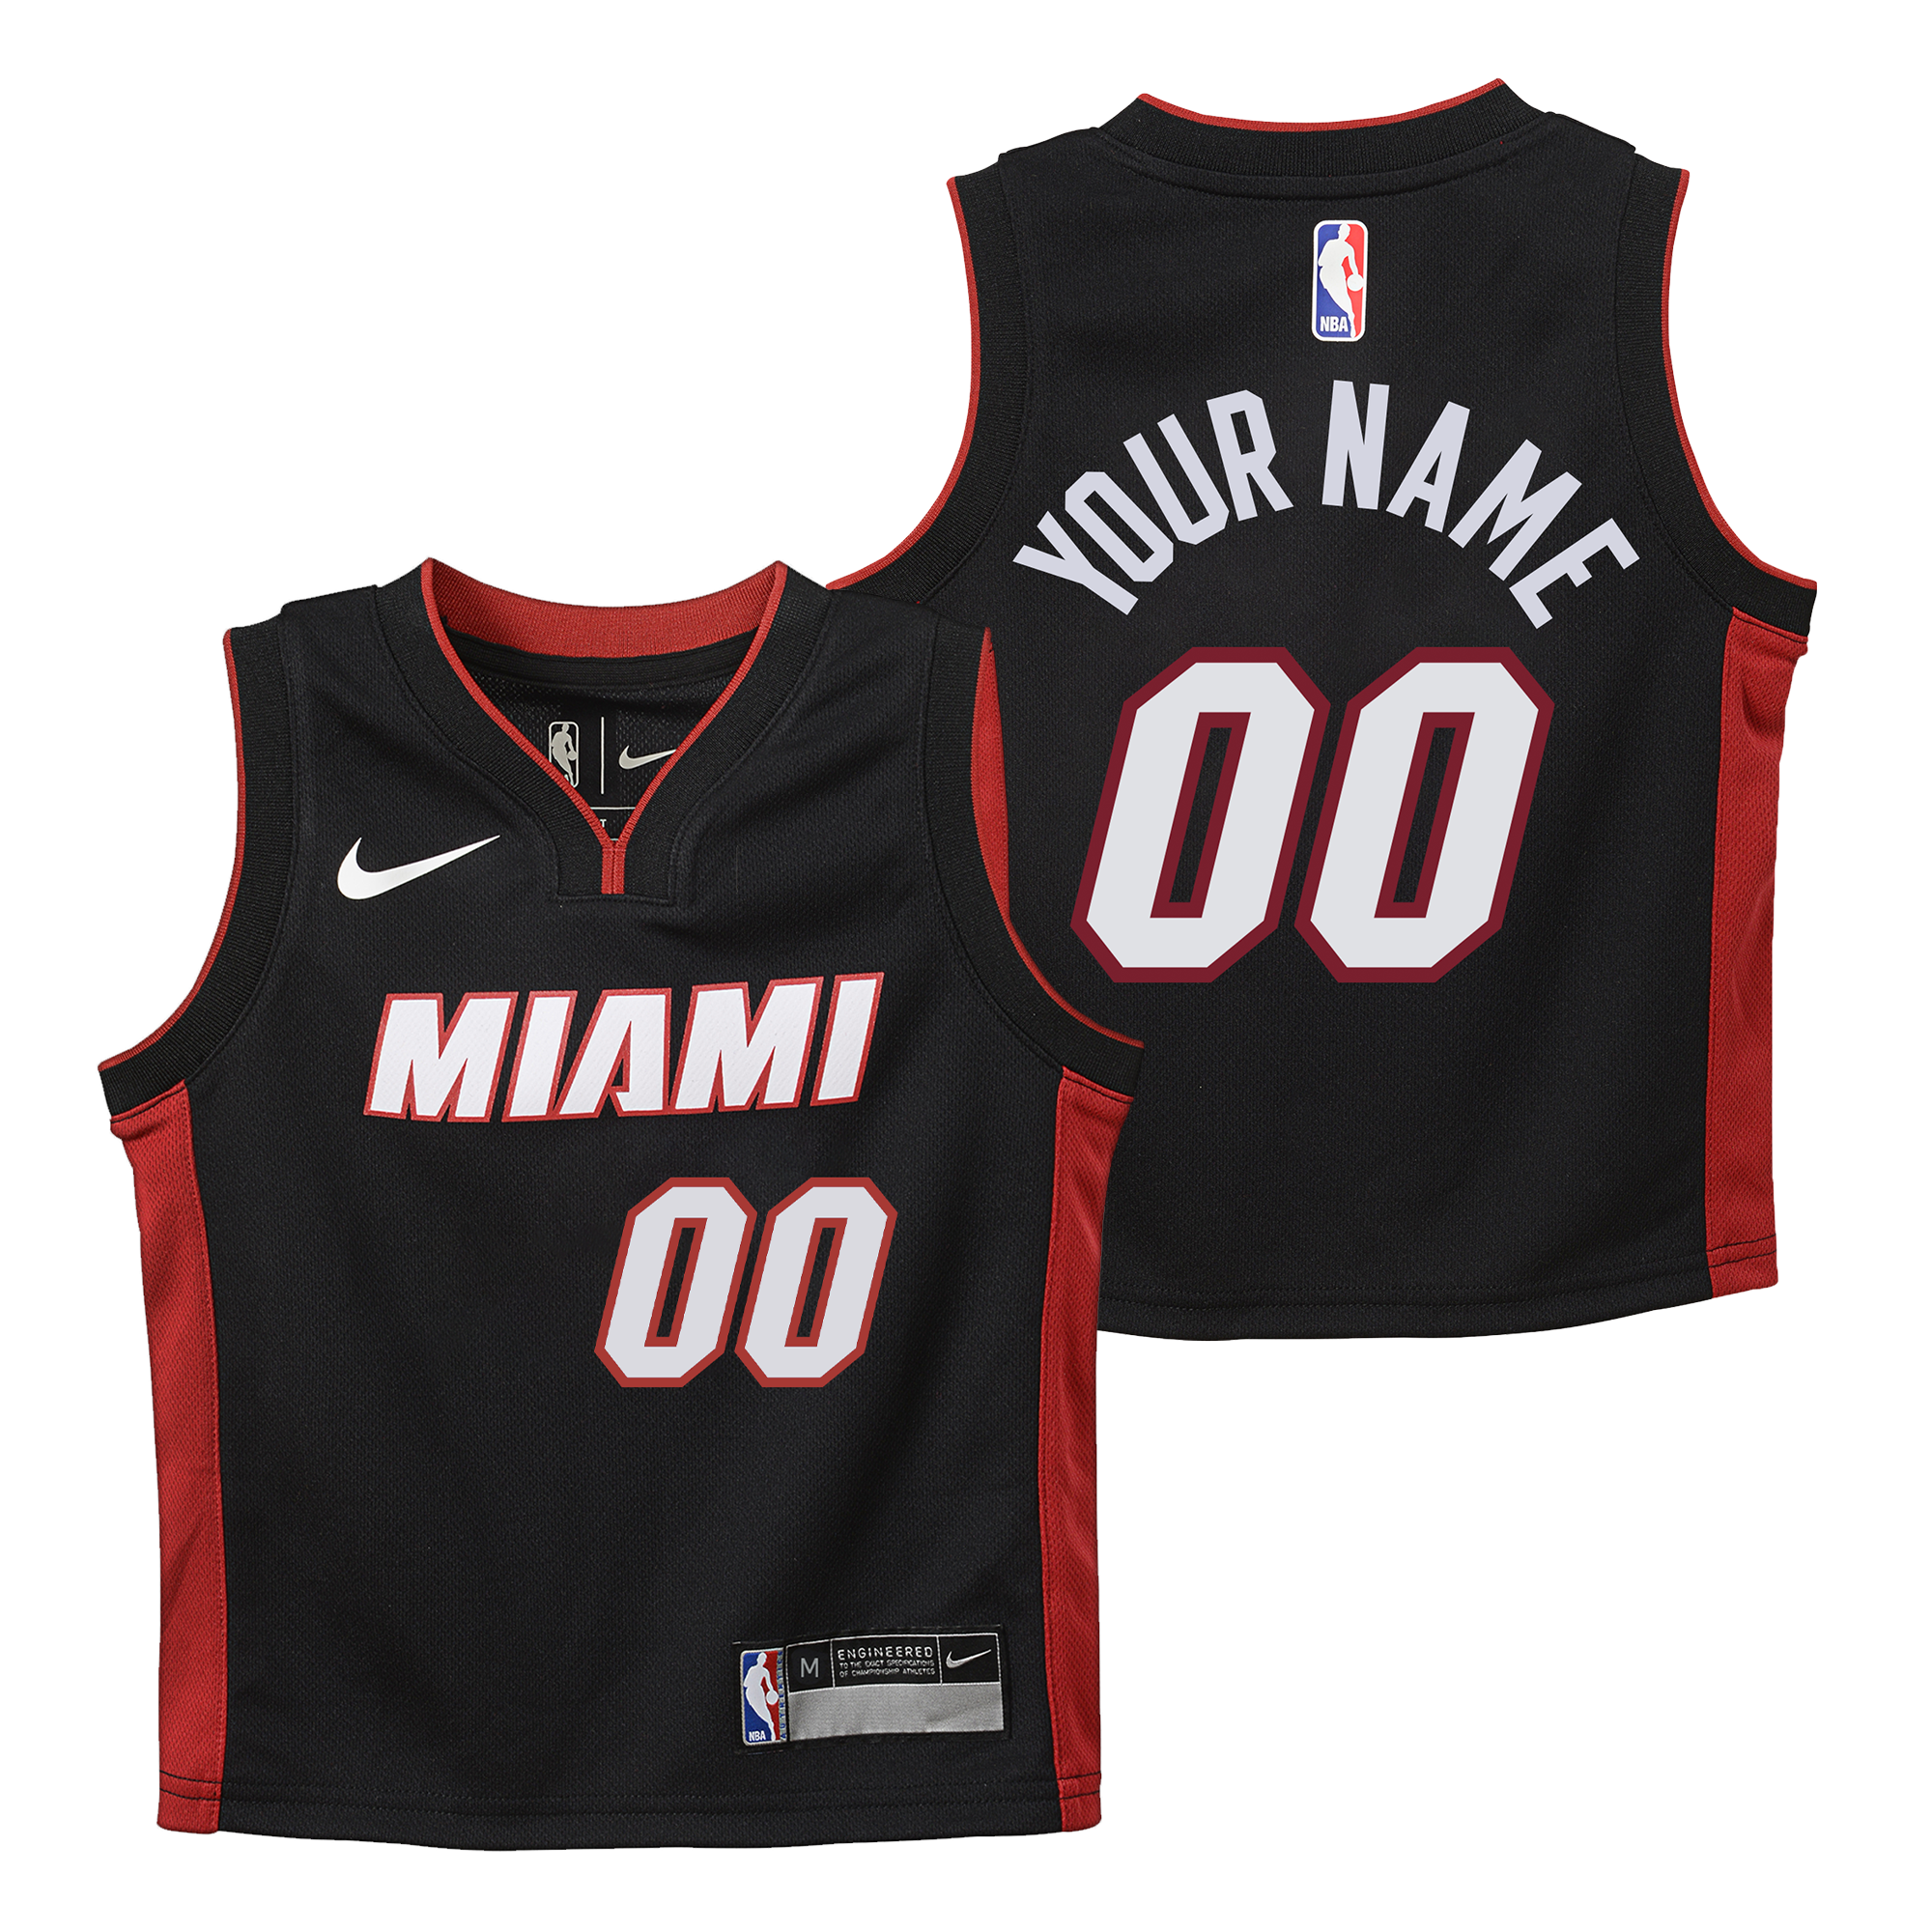 Nike Men's Miami Heat Black Logo Hoodie, Small